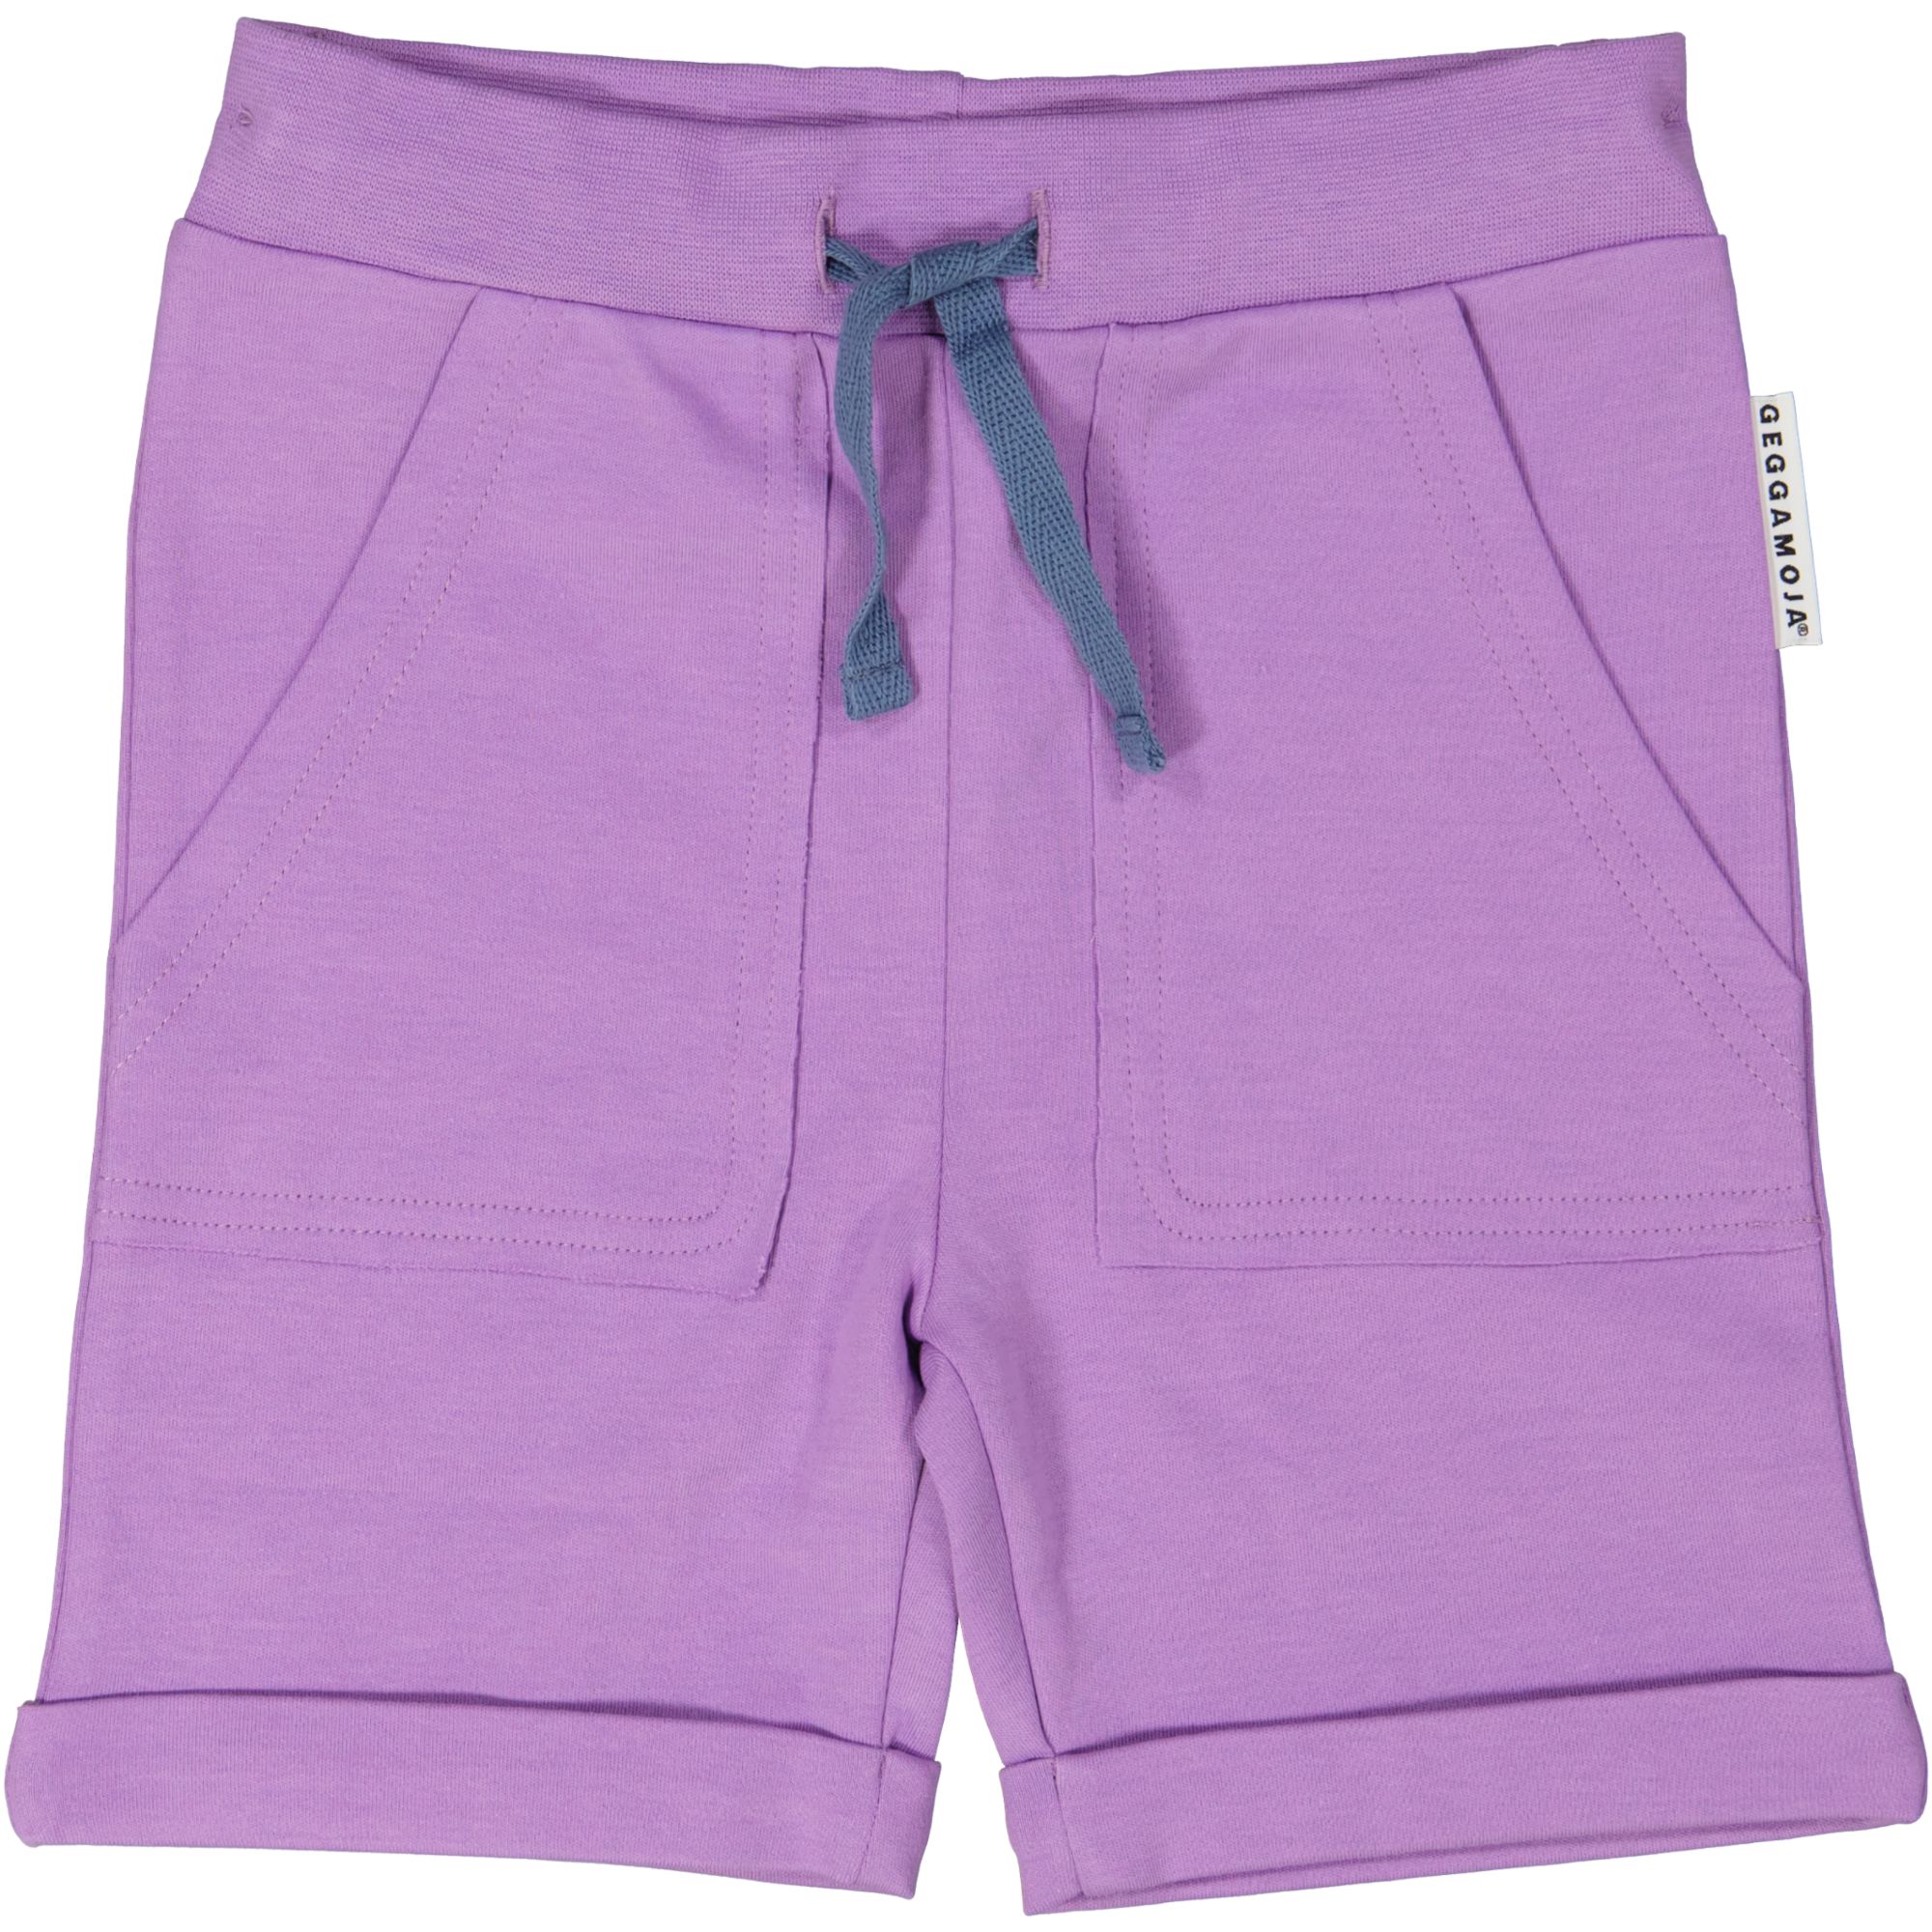 Shorts Purple 05